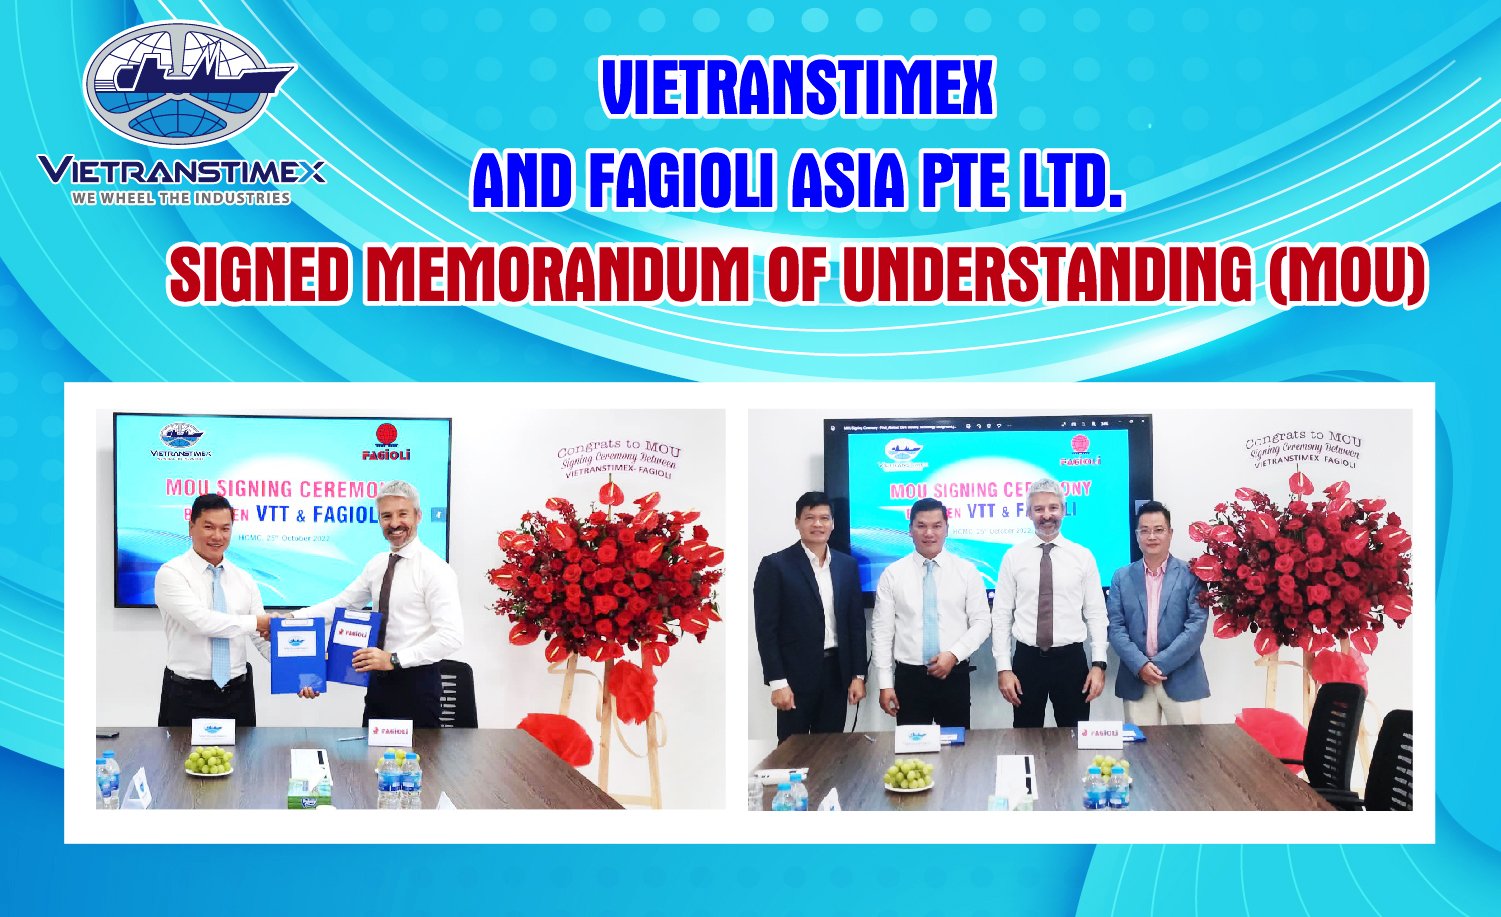 Vietranstimex and Fagioli Asia Pte Ltd. Signed Memorandum Of Understanding (MOU)